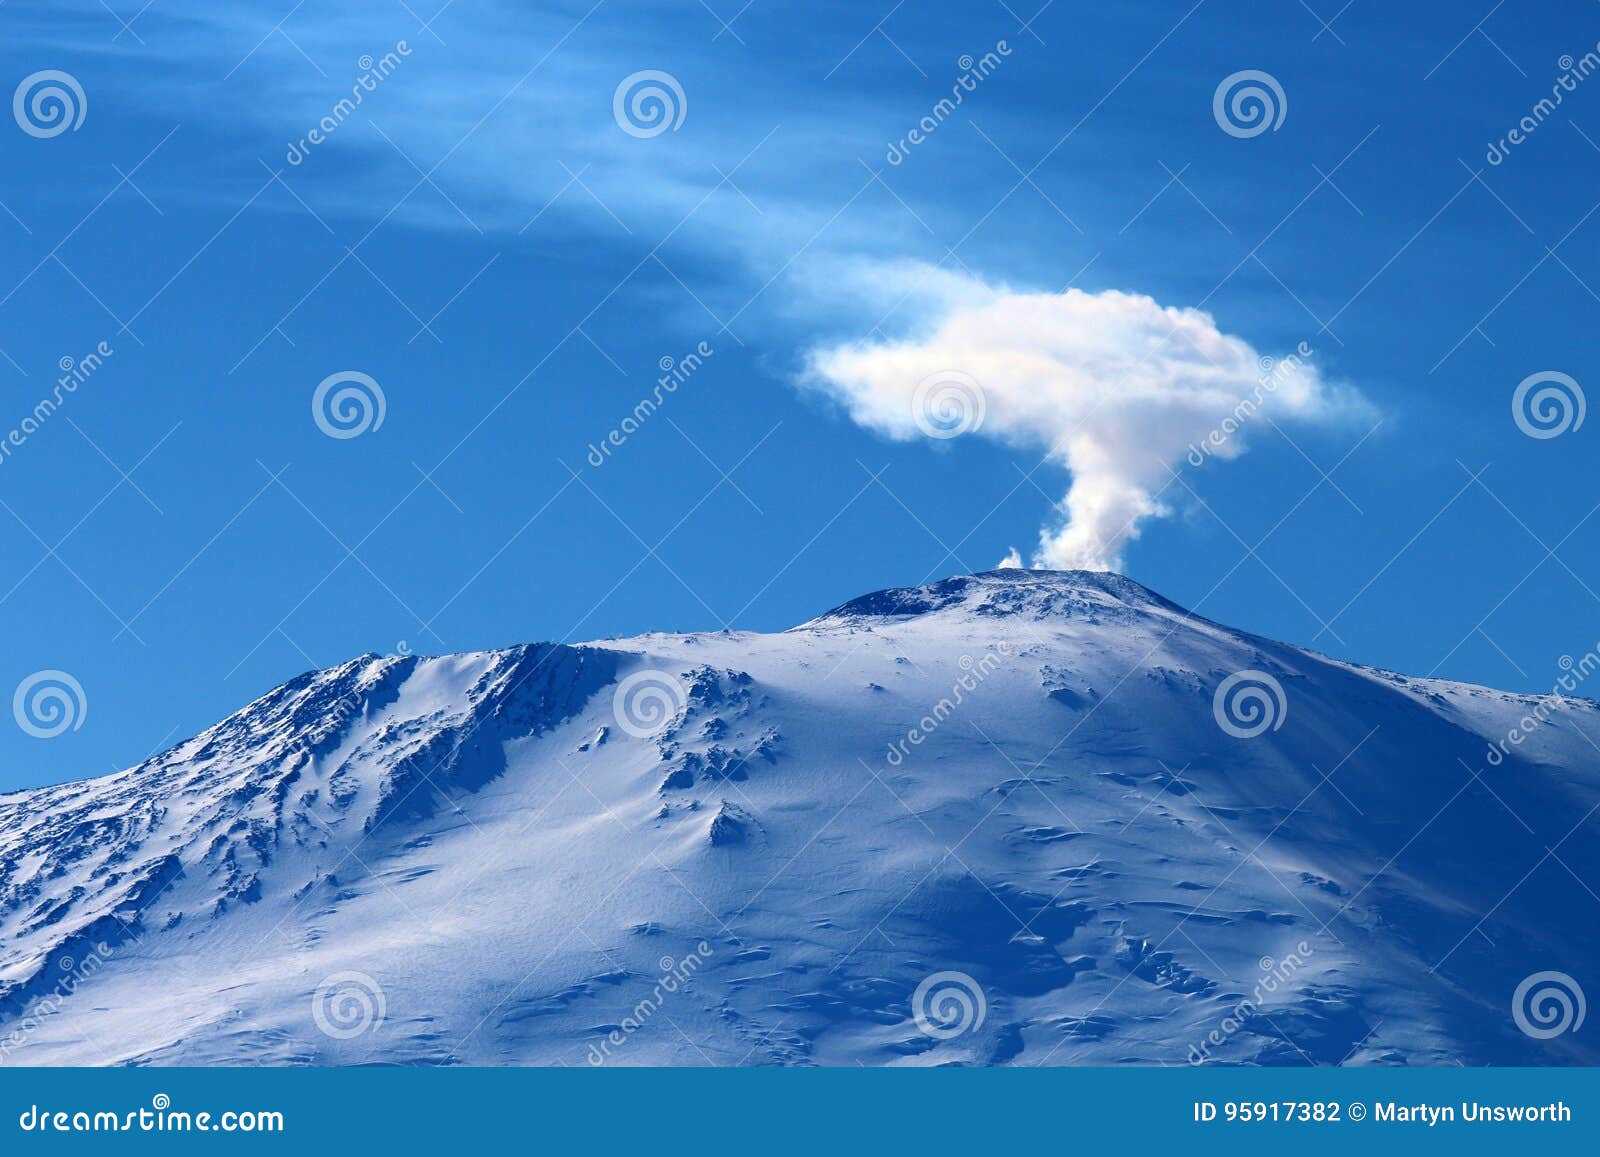 mount erebus, antarctica